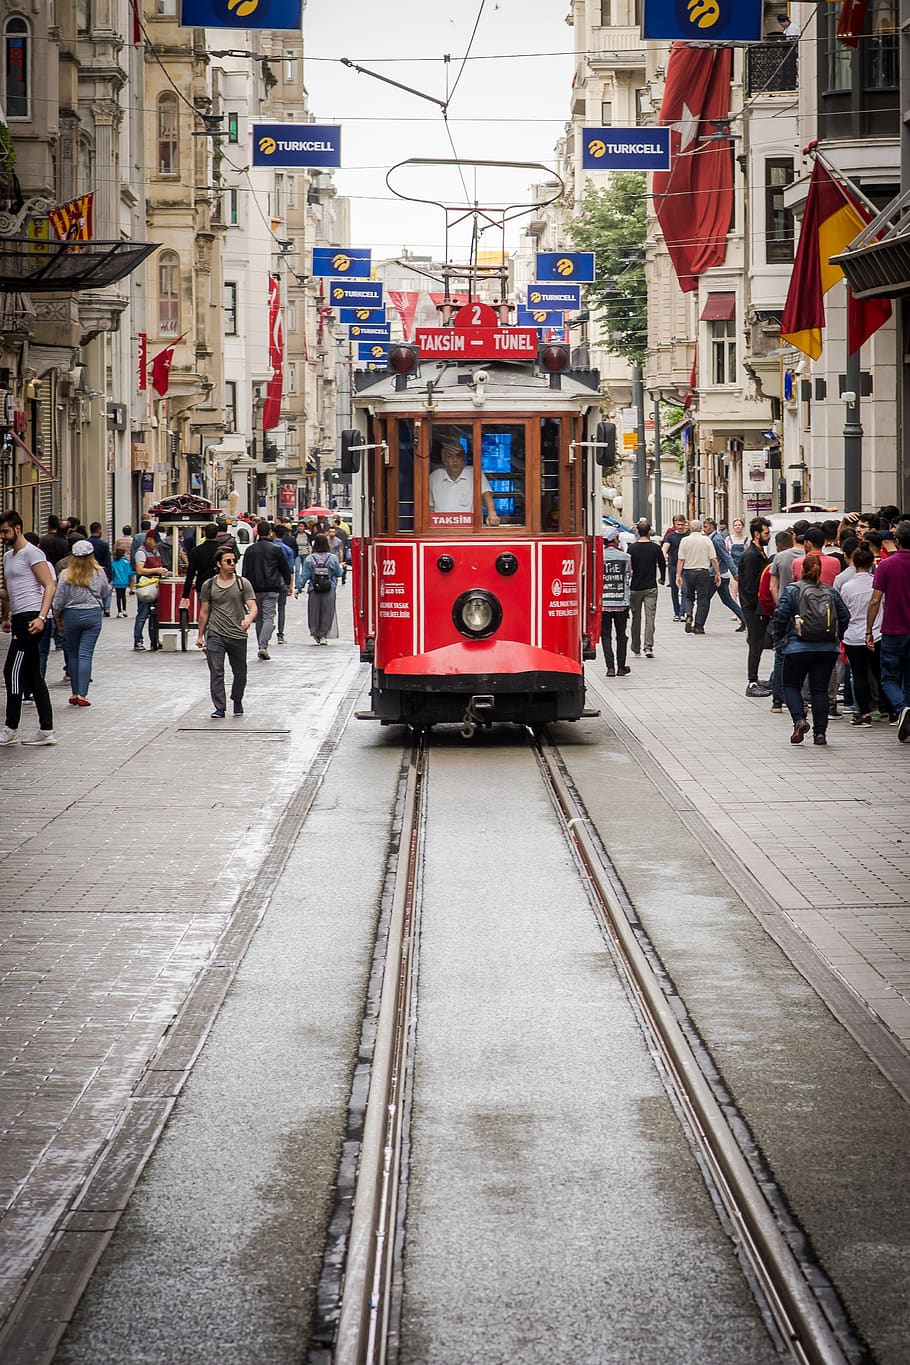 tram, taksim square, city, taksim, square, historical, retro, urban, transport, traditional